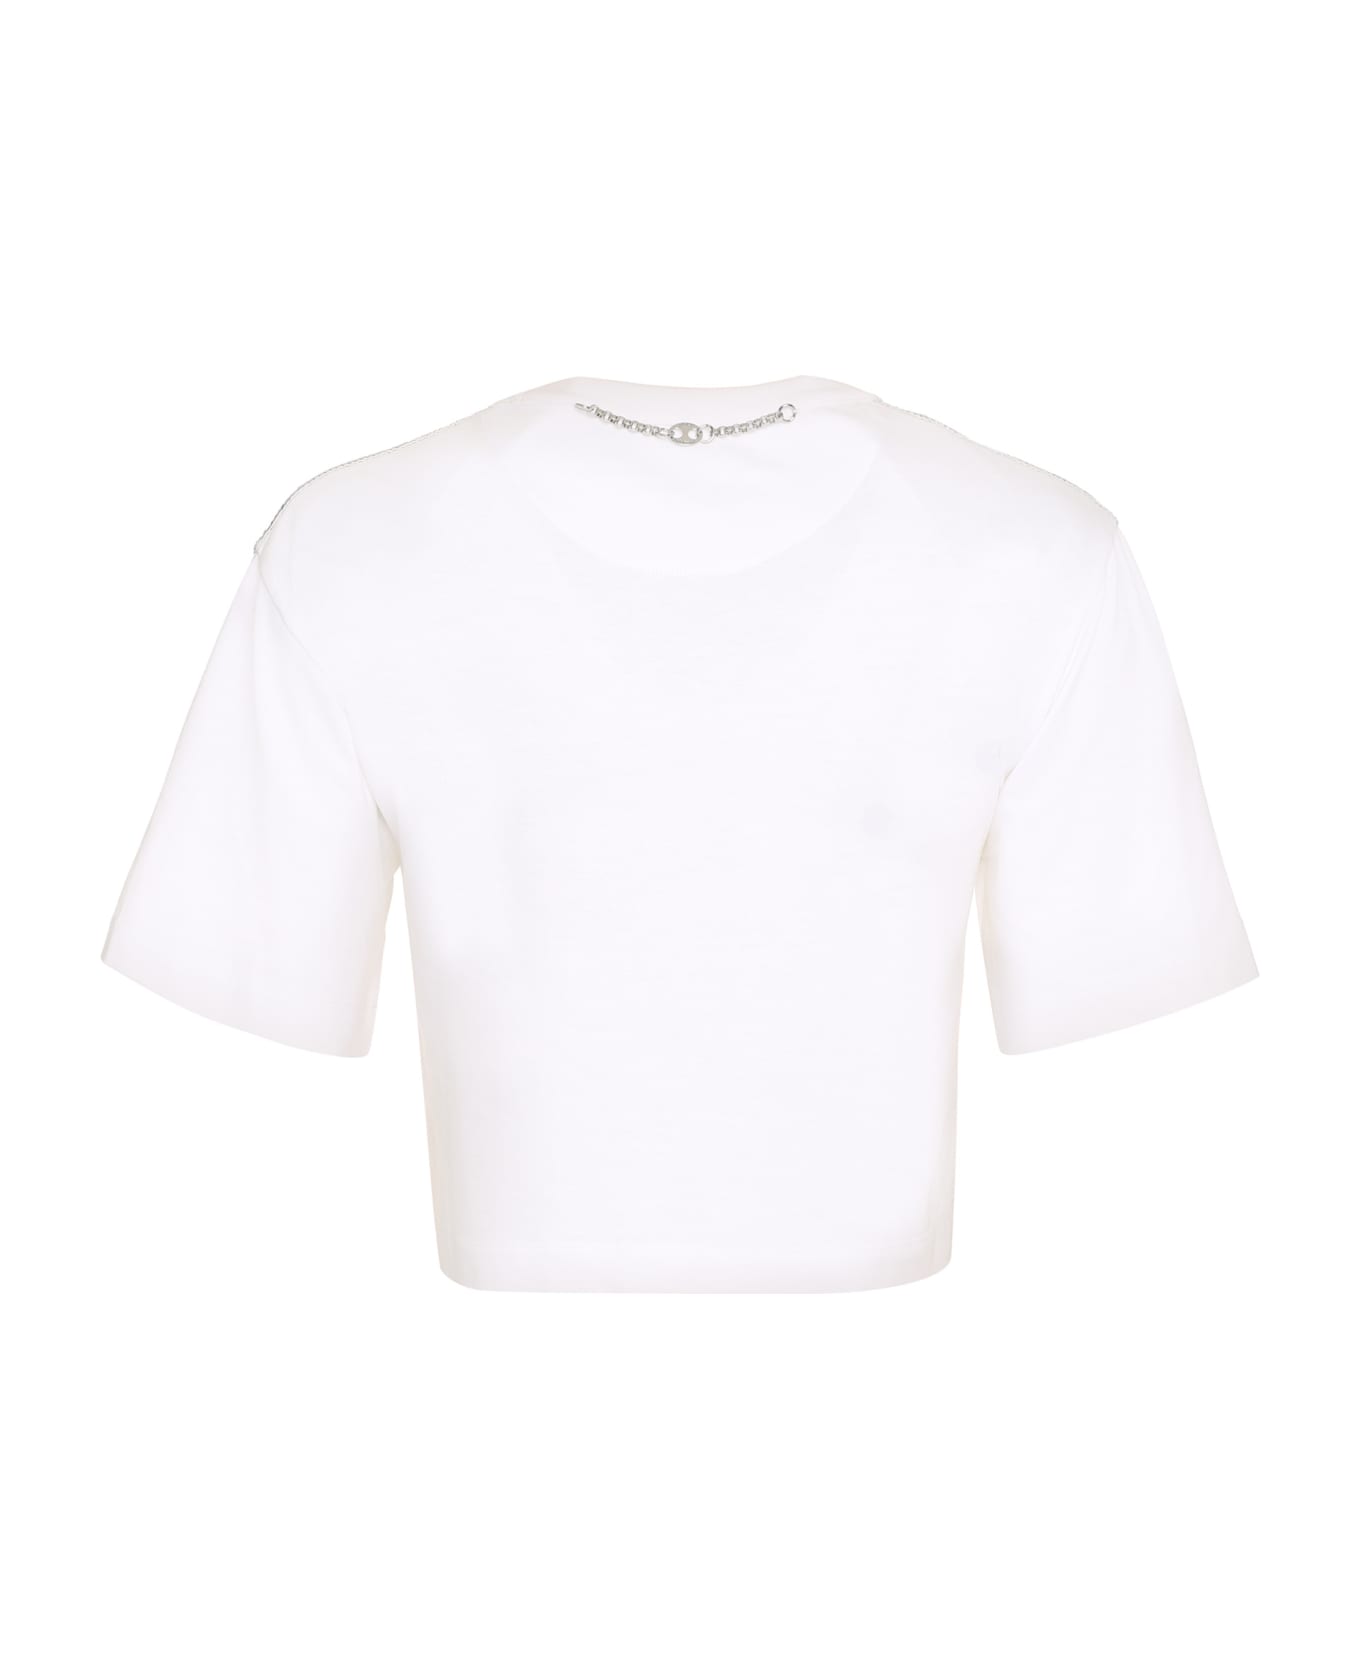 Paco Rabanne Crew-neck T-shirt - Silver White